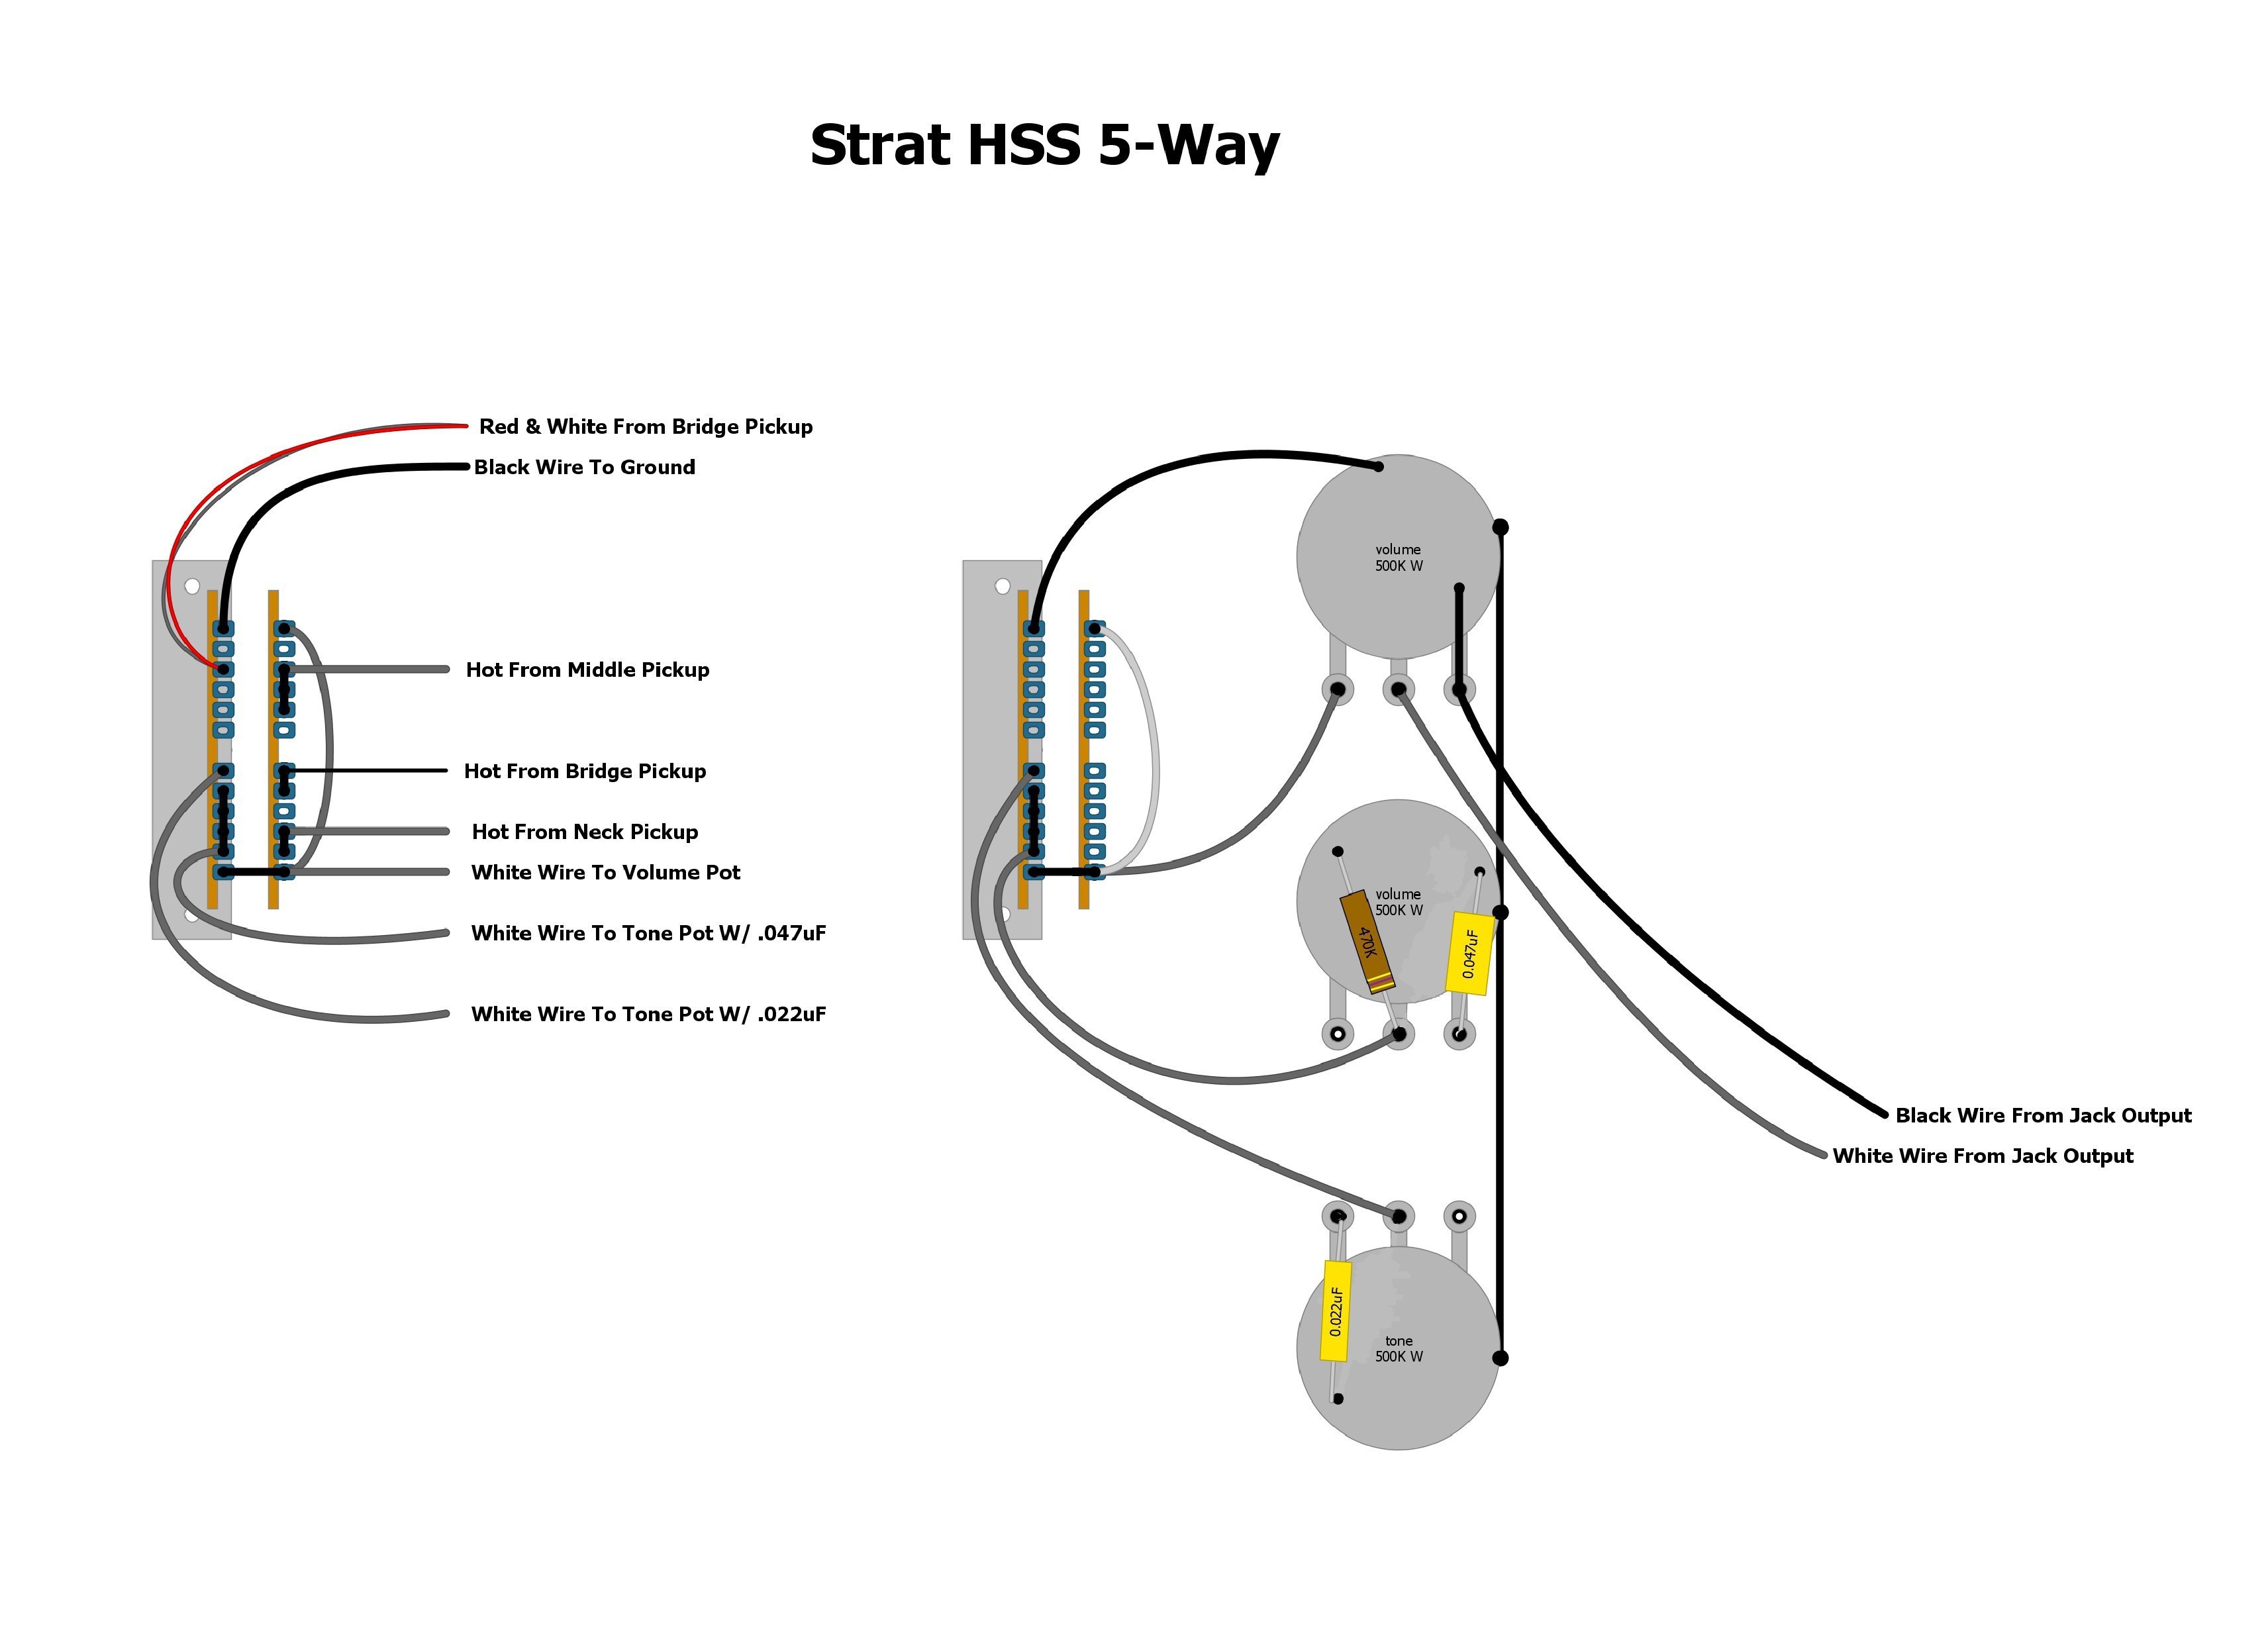 Wiring Diagram for A Stratocaster Guitar Save Wiring Diagram Stratocaster Guitar New Wiring Diagram Guitar Fender